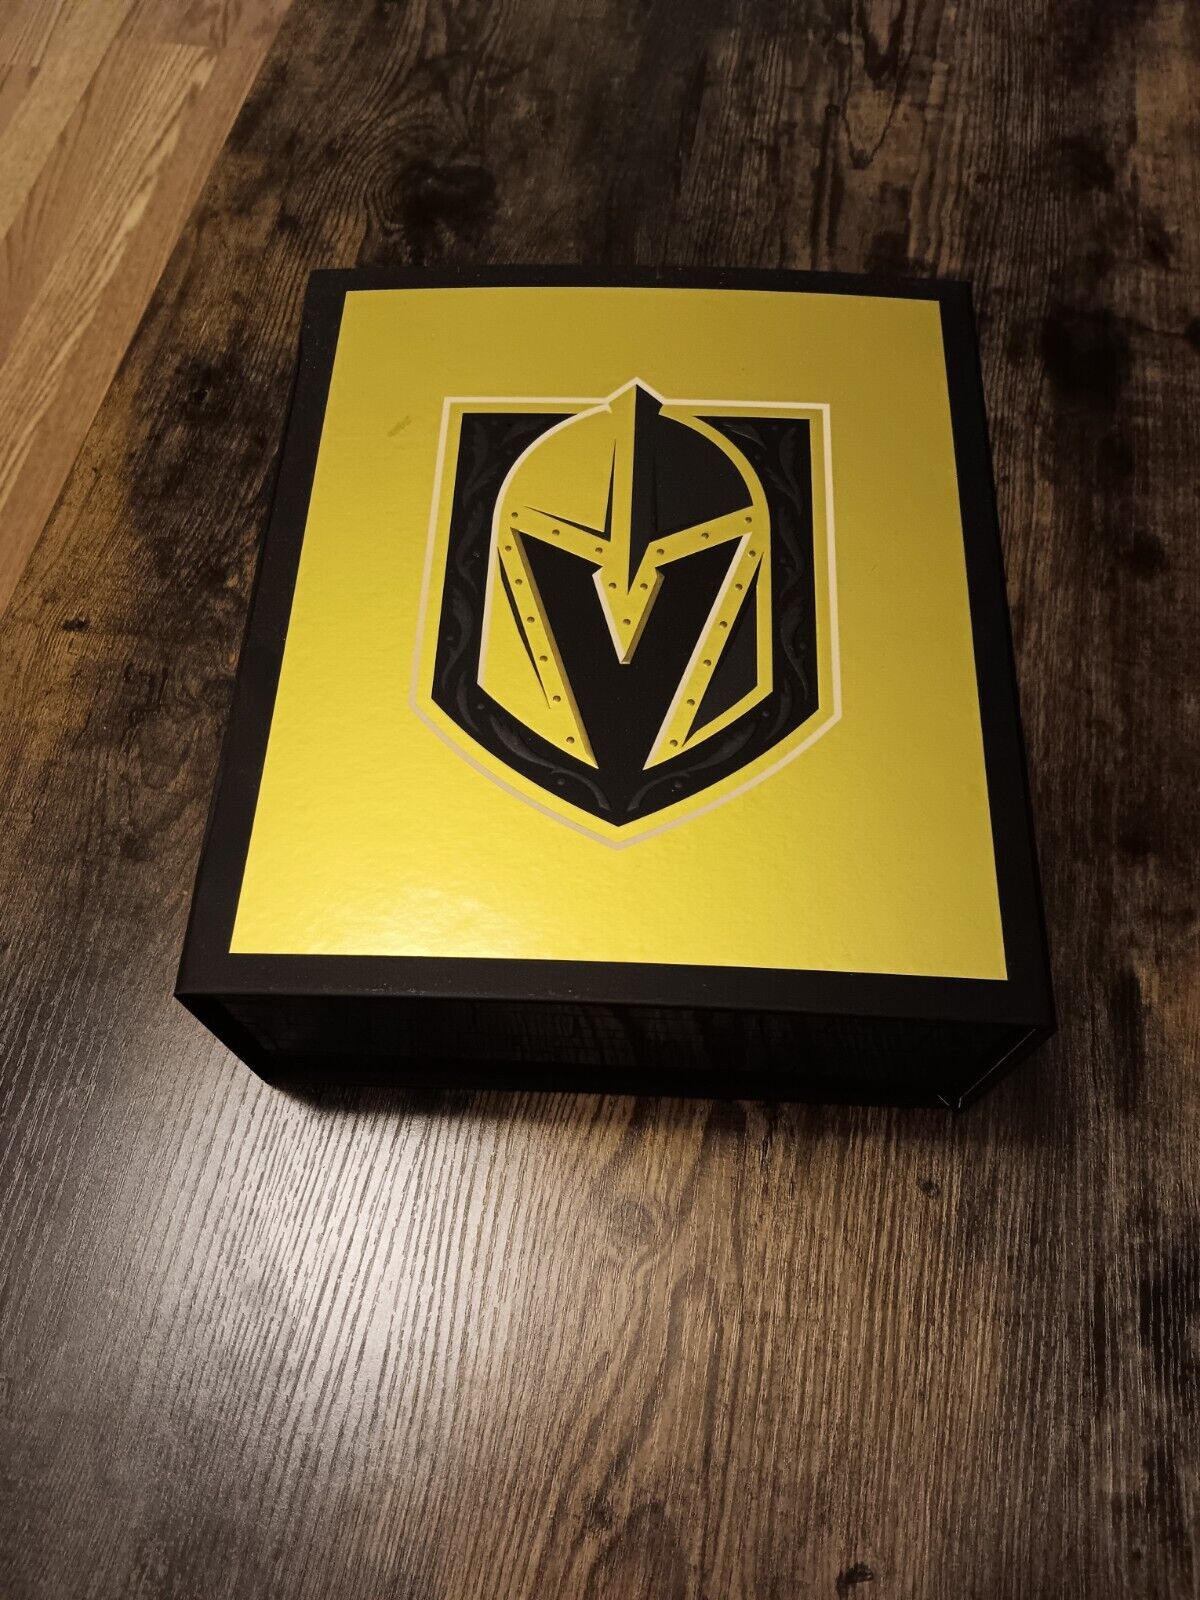 Las Vegas Golden Knights 2019-20 Season Ticket Gift Box (Box Only - No Contents)